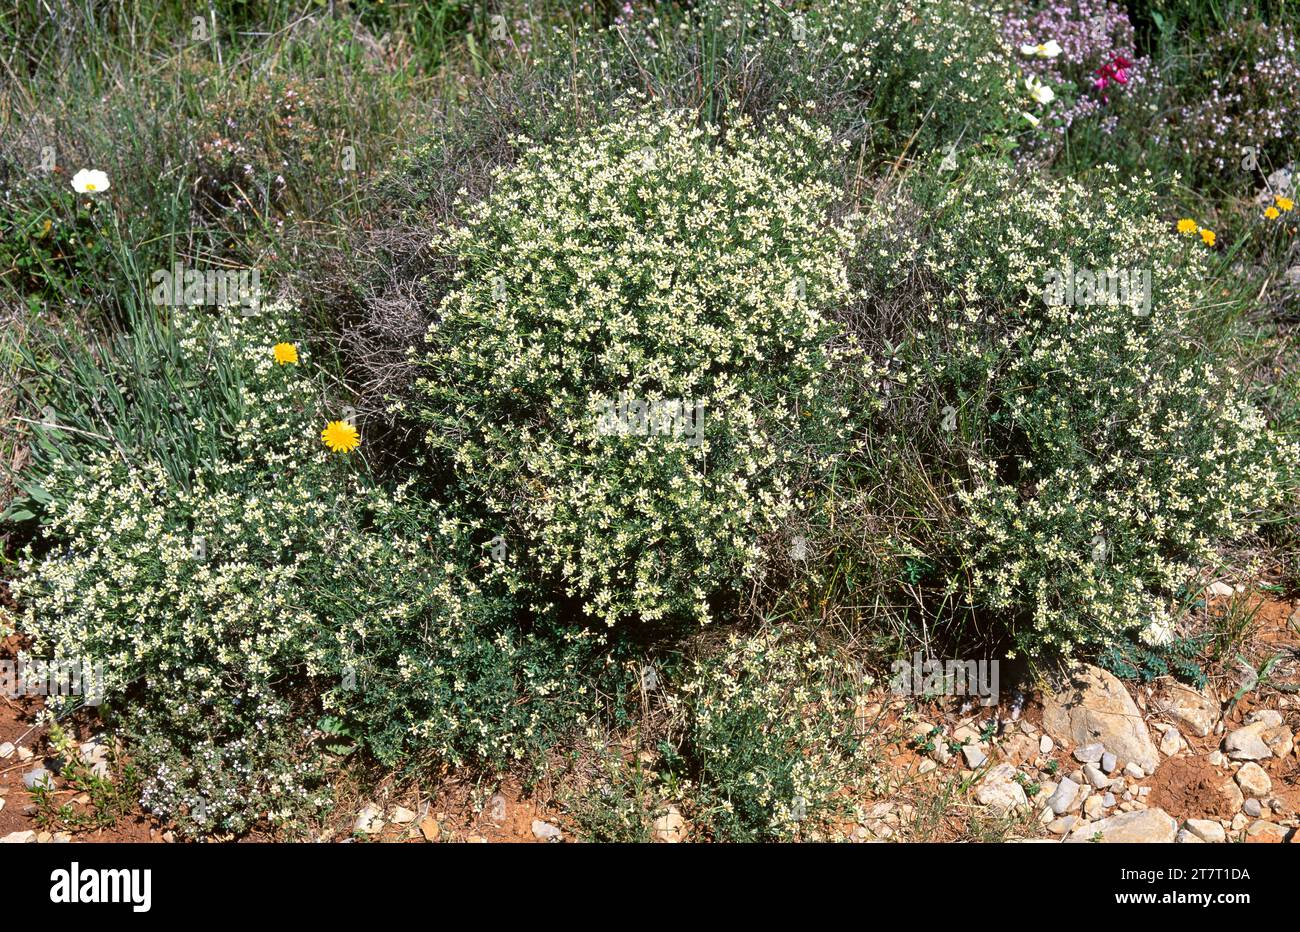 Boja blanca (Dorycnium pentaphyllum) is a perennial herb native to Mediterranean region. This photo was taken in Garraf Natural Park, Barcelona, Catal Stock Photo